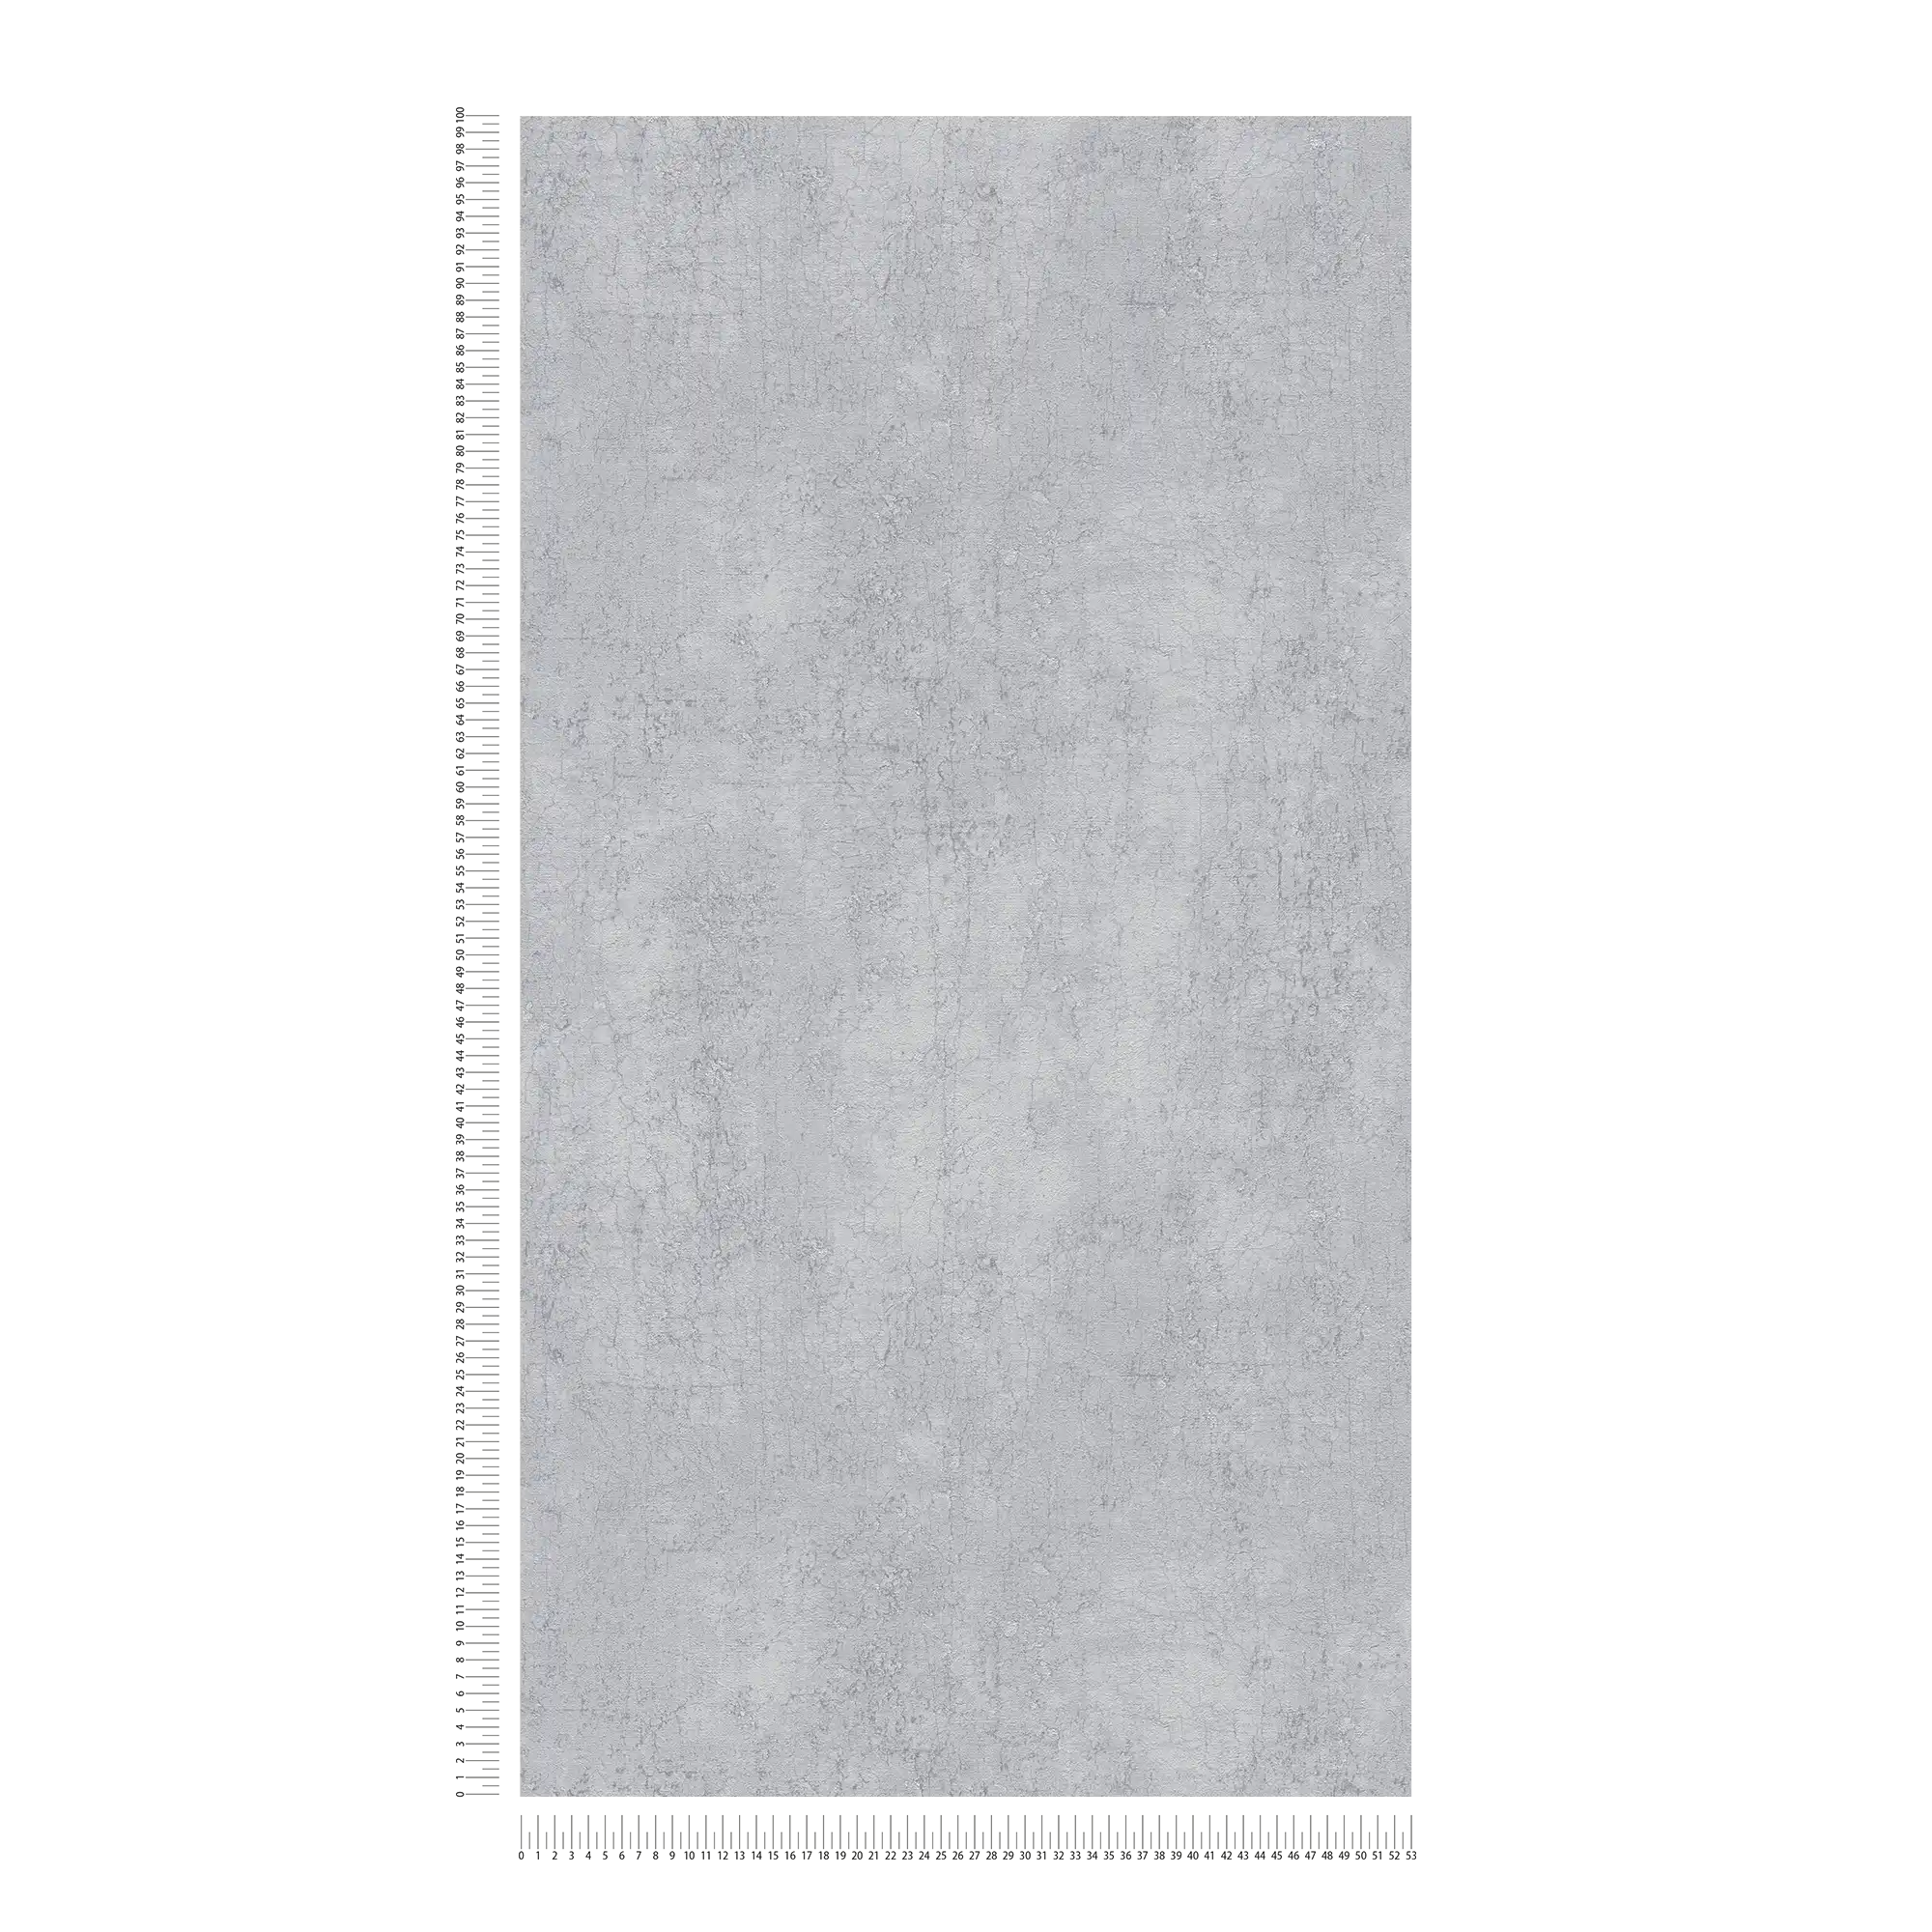             Plaster optics wallpaper stone grey with silver accents - grey, metallic
        